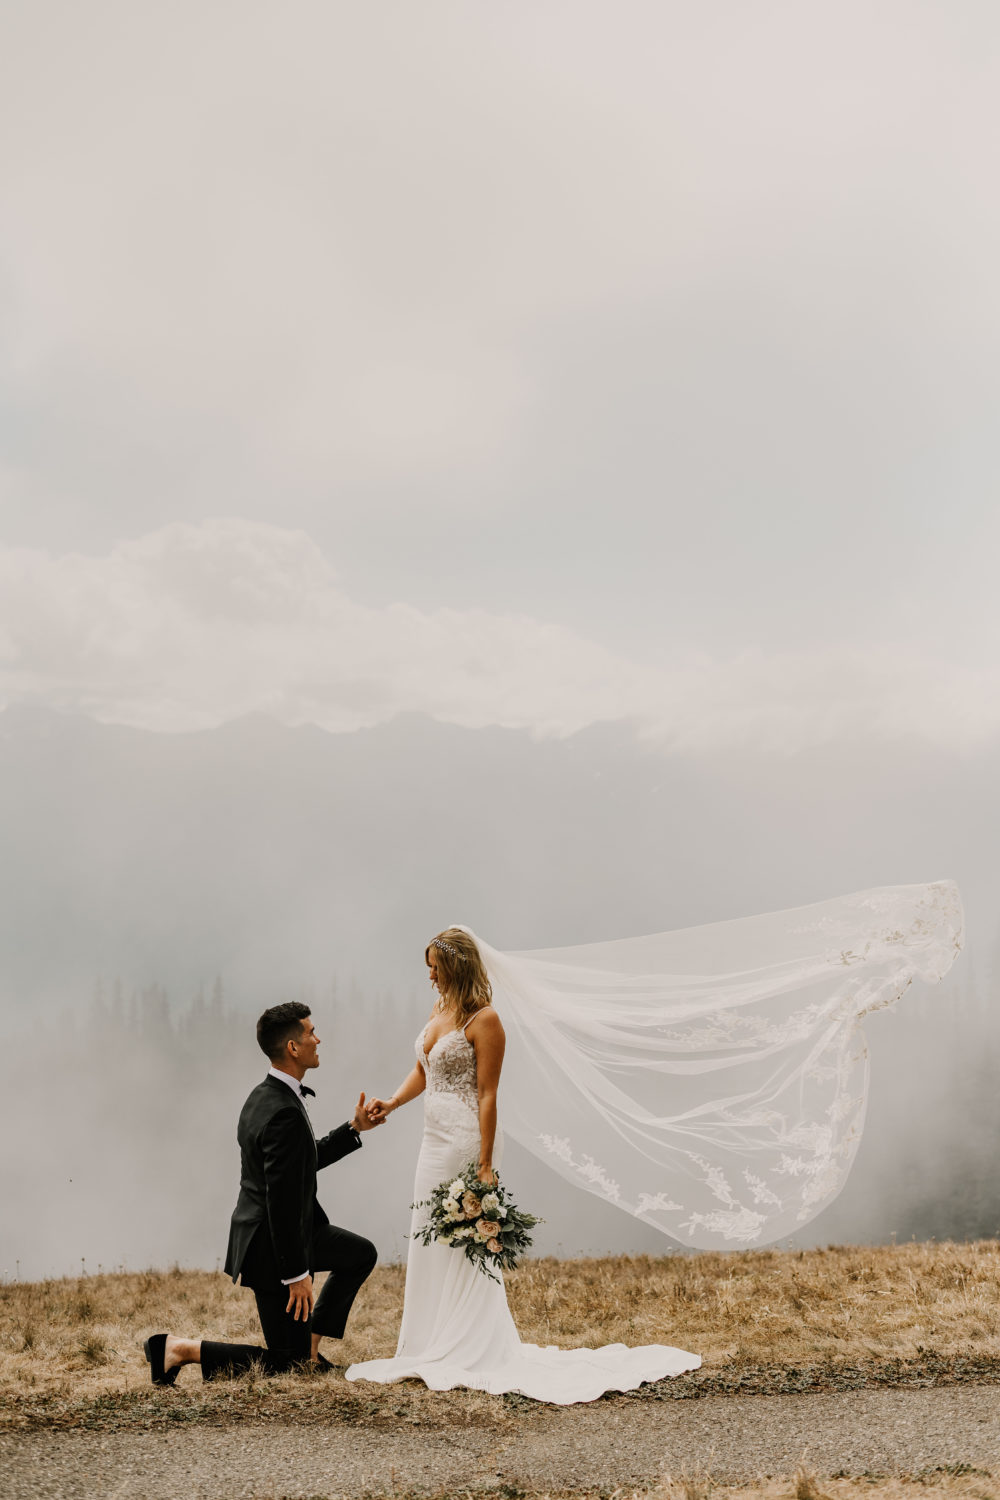 A Magical Hurricane Ridge Wedding - PNW Destination Wedding